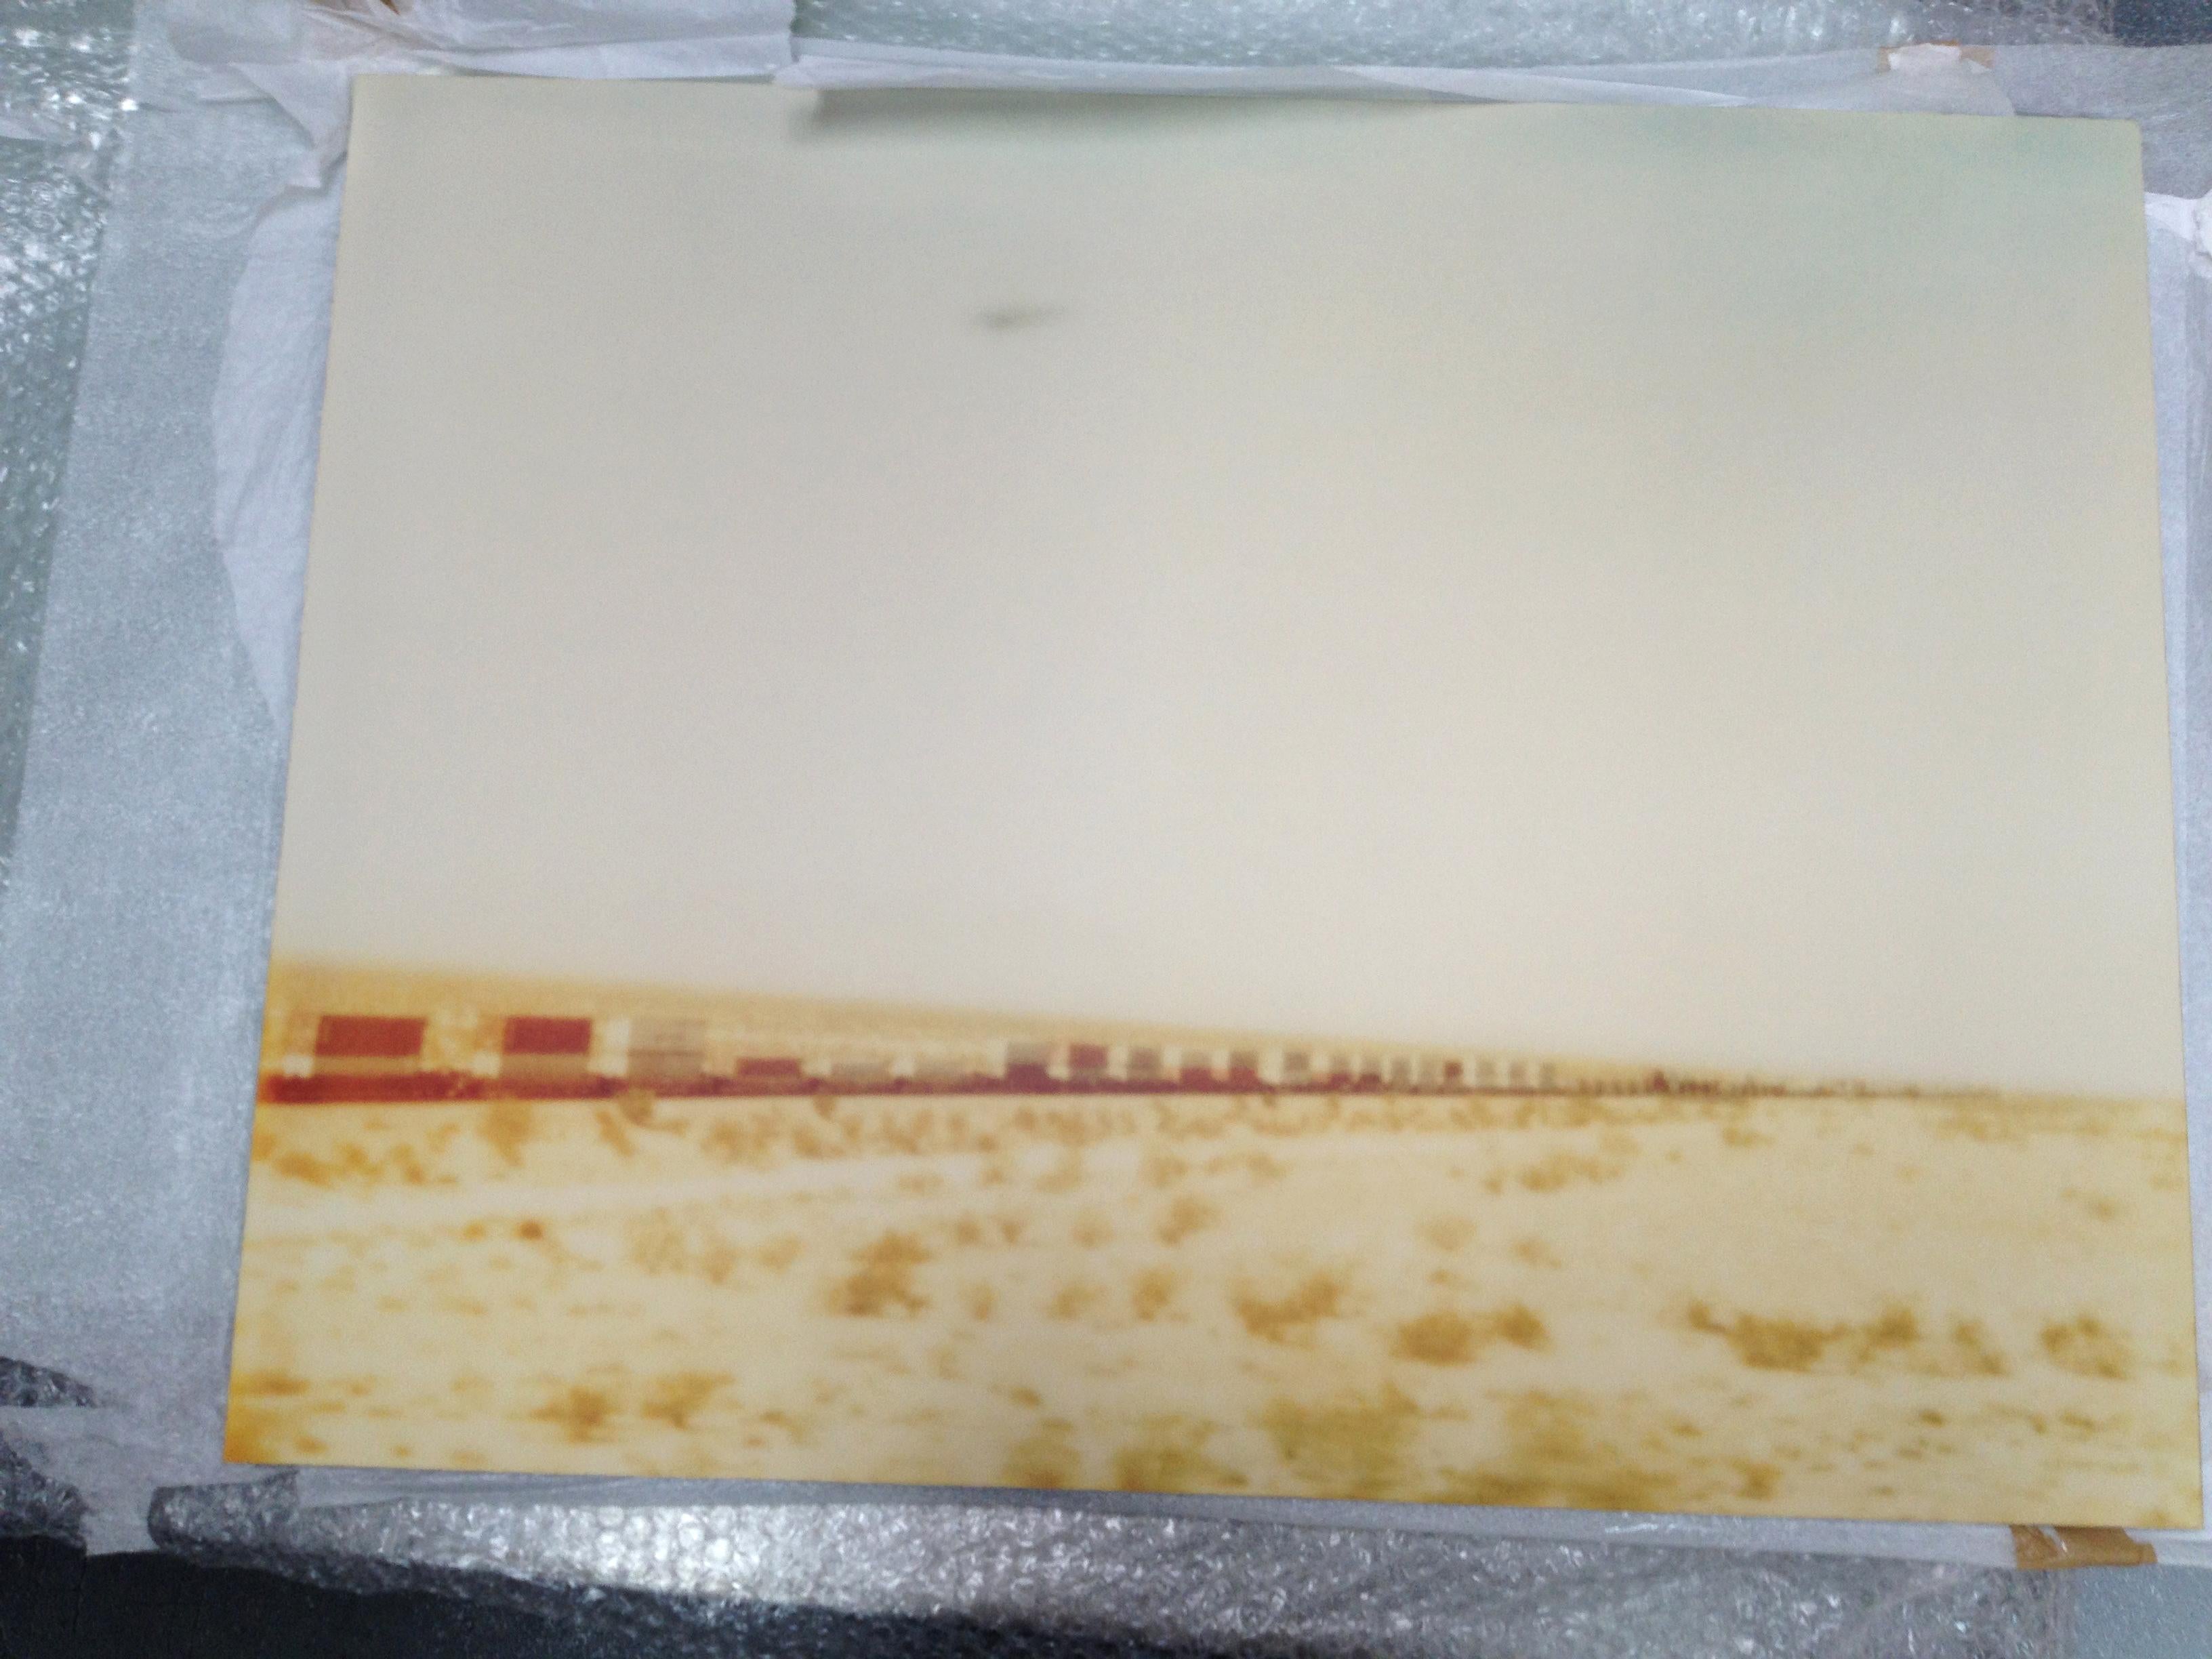 Train crosses Plain (Wastelands) - analog hand-print, mounted - Polaroid, Color - Photograph by Stefanie Schneider